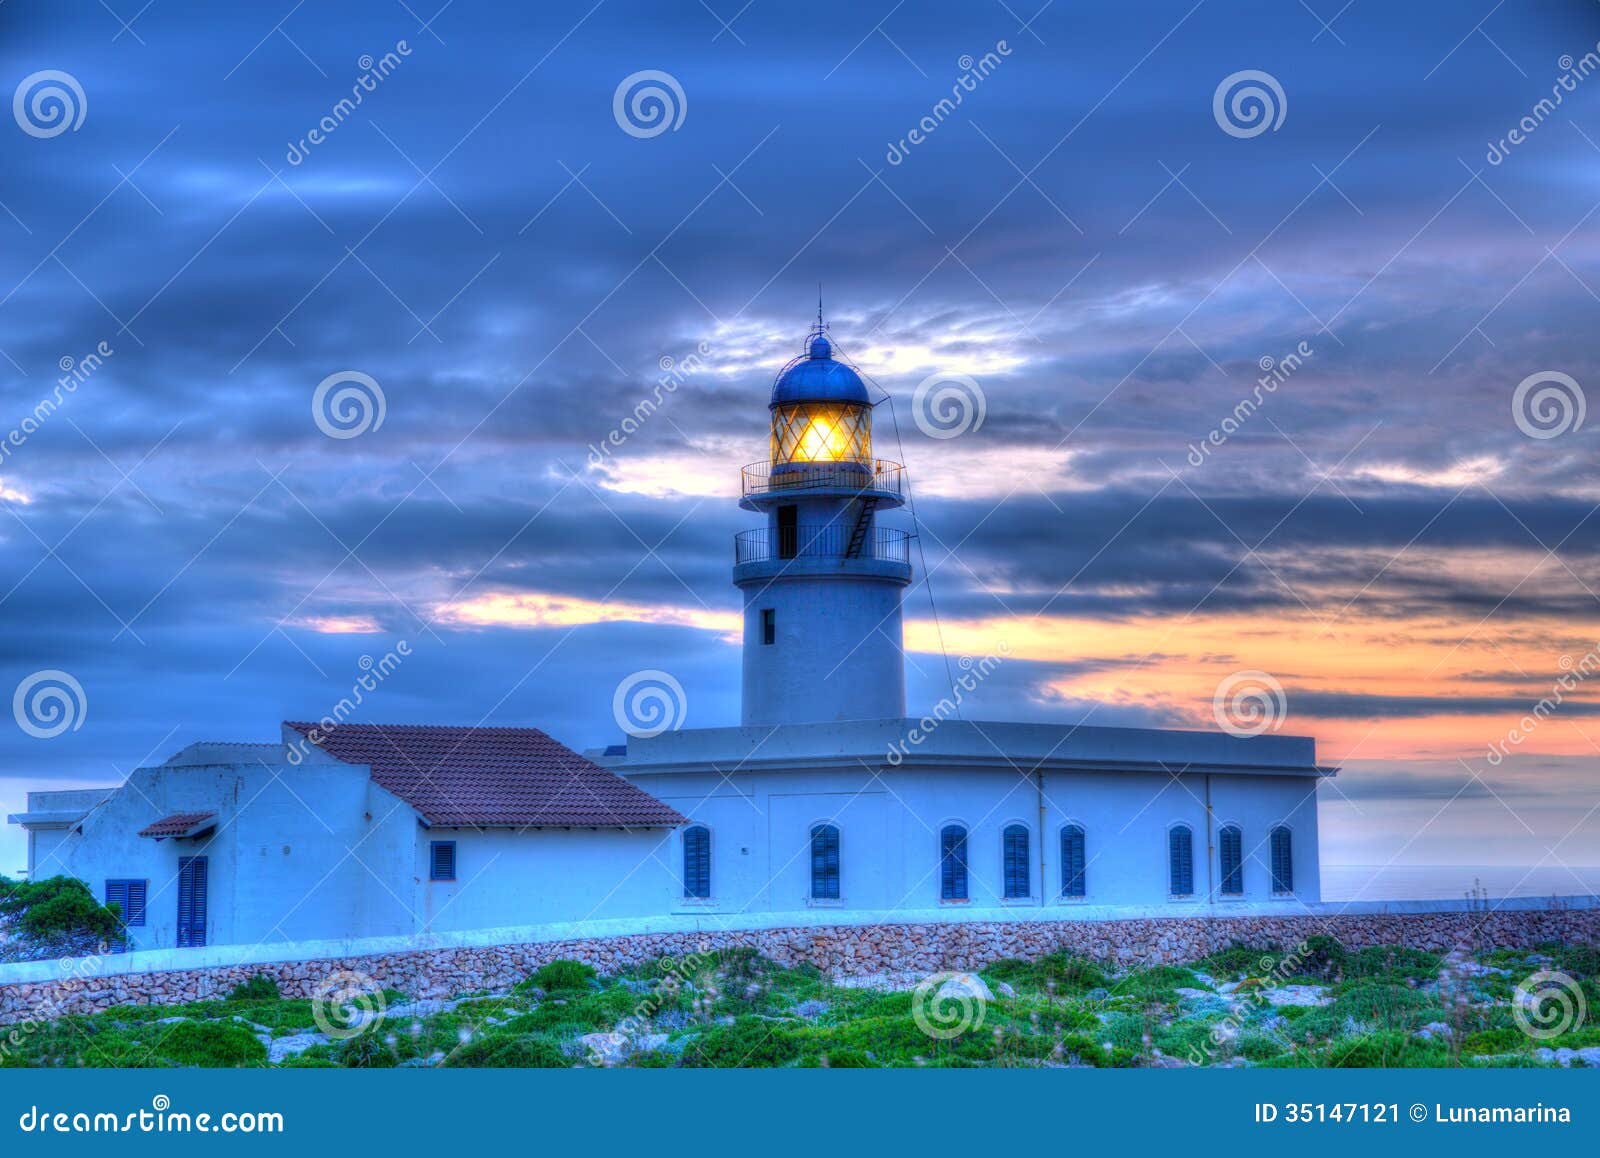 menorca sunset at faro de caballeria lighthouse